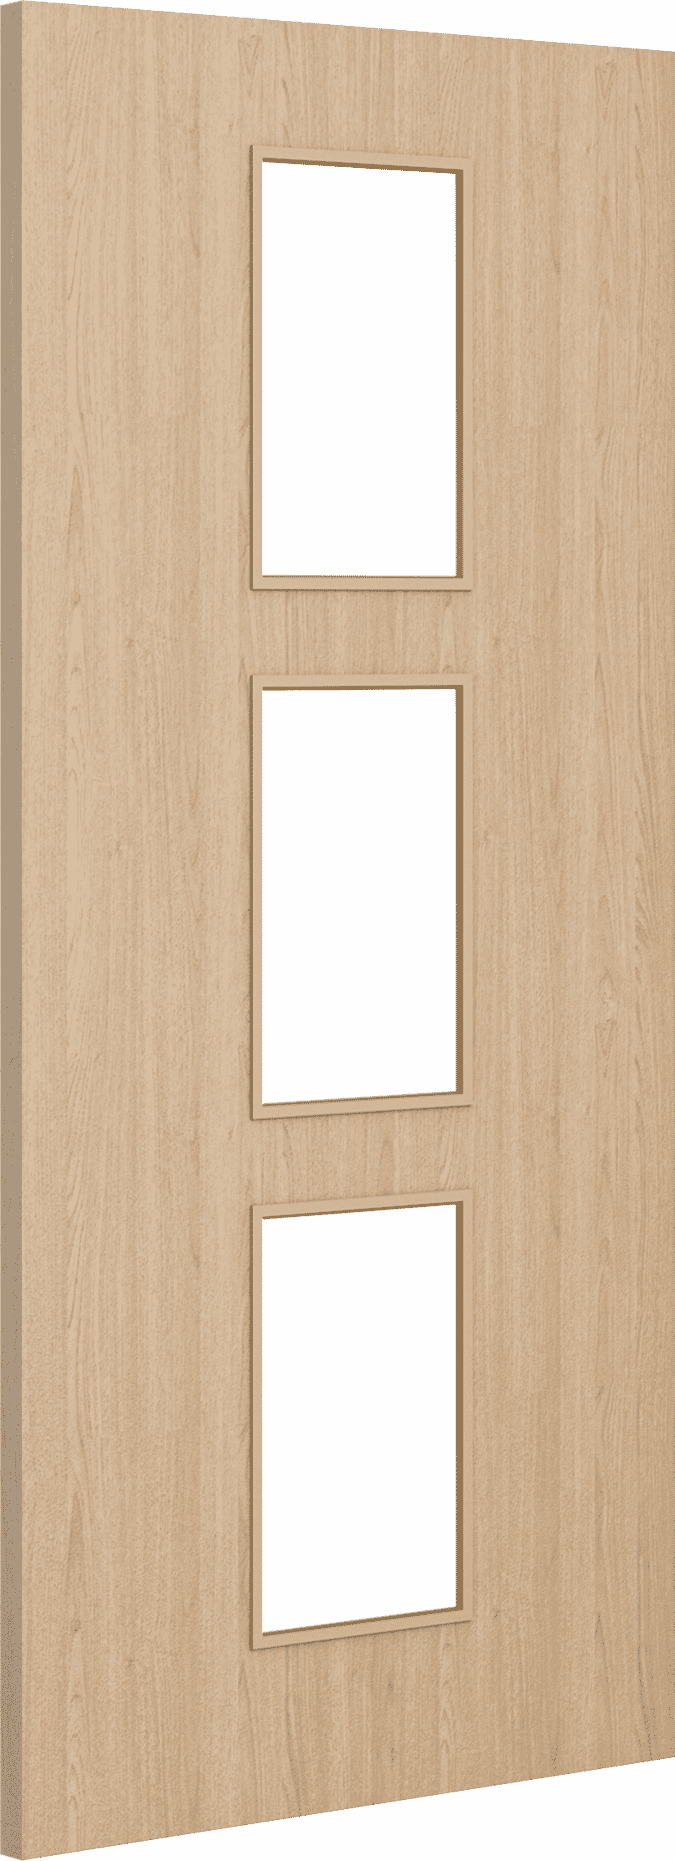 1981mm x 457mm x 44mm (18") Architectural Oak 11 Frosted Glazed - Prefinished FD30 Fire Door Blank